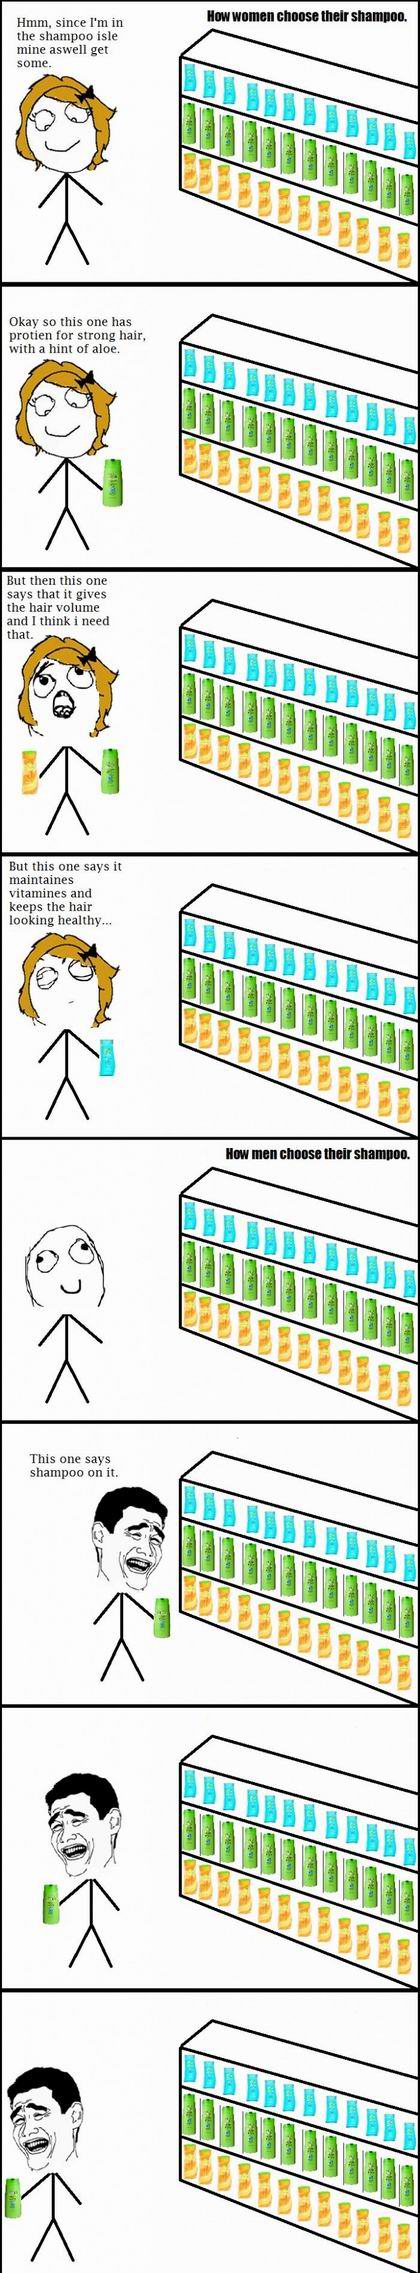 Obrázek how-we-choose-shampoos